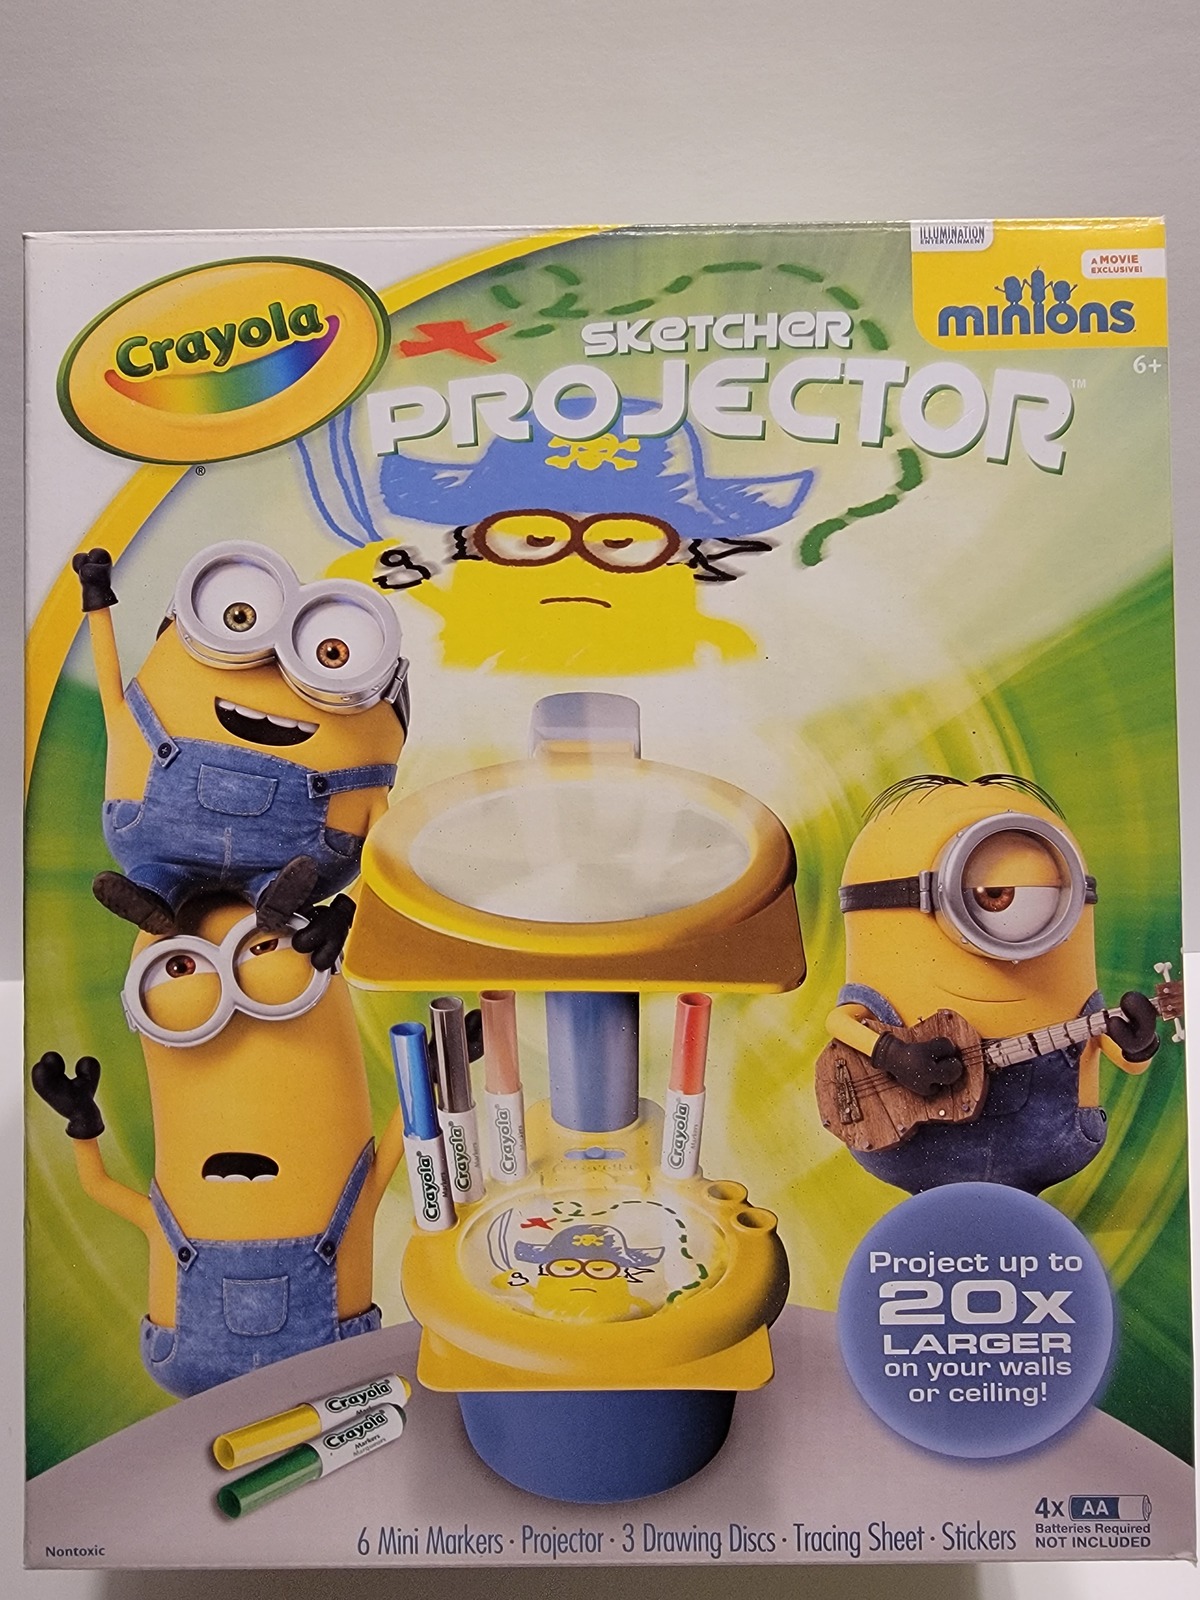 New Crayola Minions Sketcher Projector Light Up Set Kids Play Kit Toy Gift NIB - $40.00